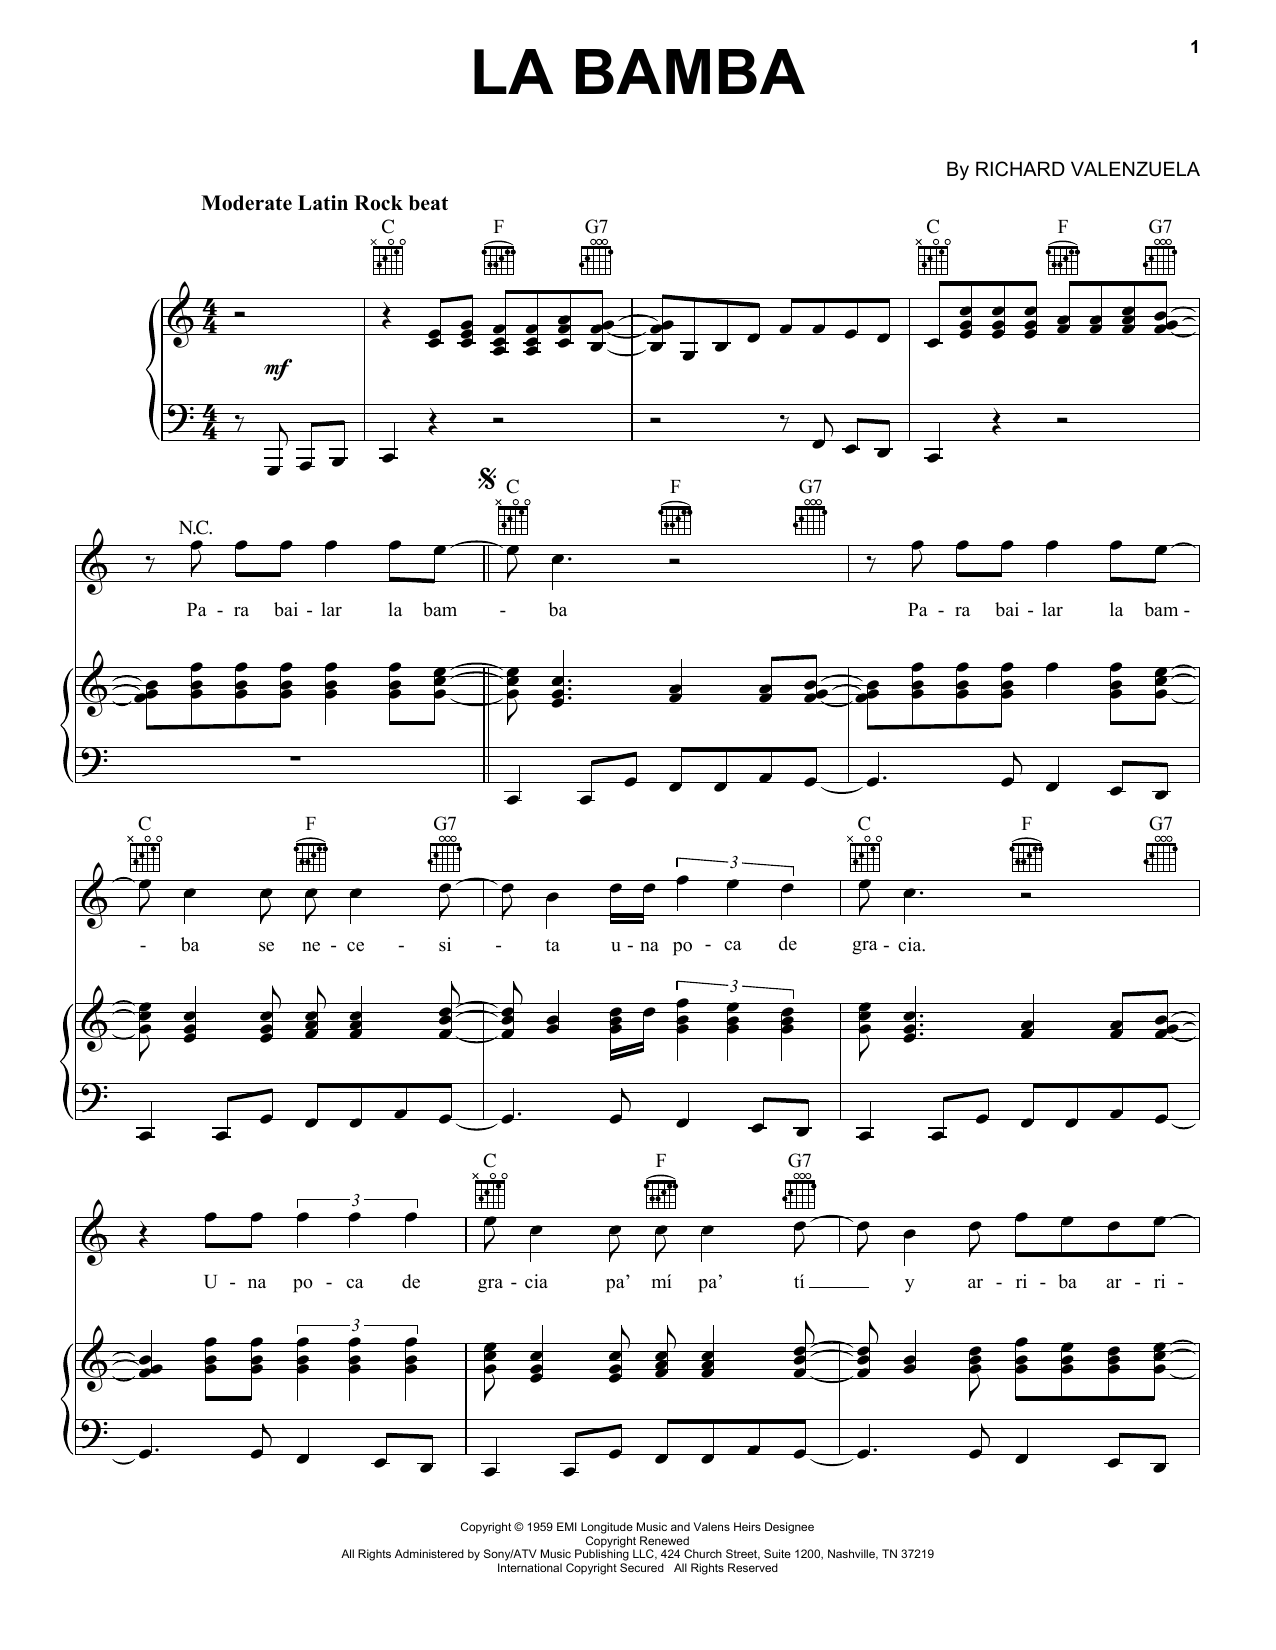 Ritchie Valens La Bamba Sheet Music Notes & Chords for Beginner Ukulele - Download or Print PDF